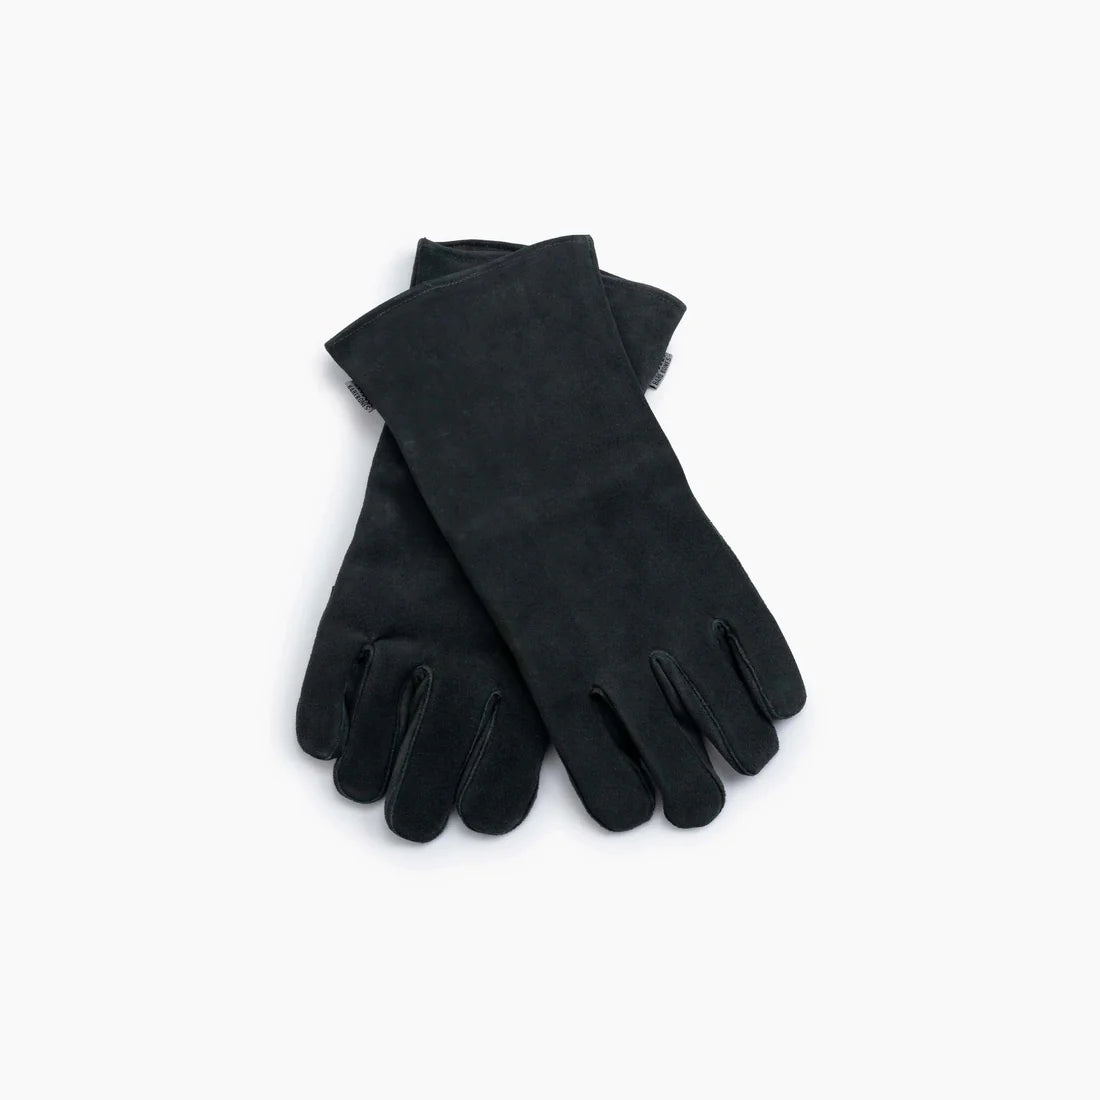 Barebones Open Fire Gloves - Large / Extra Large